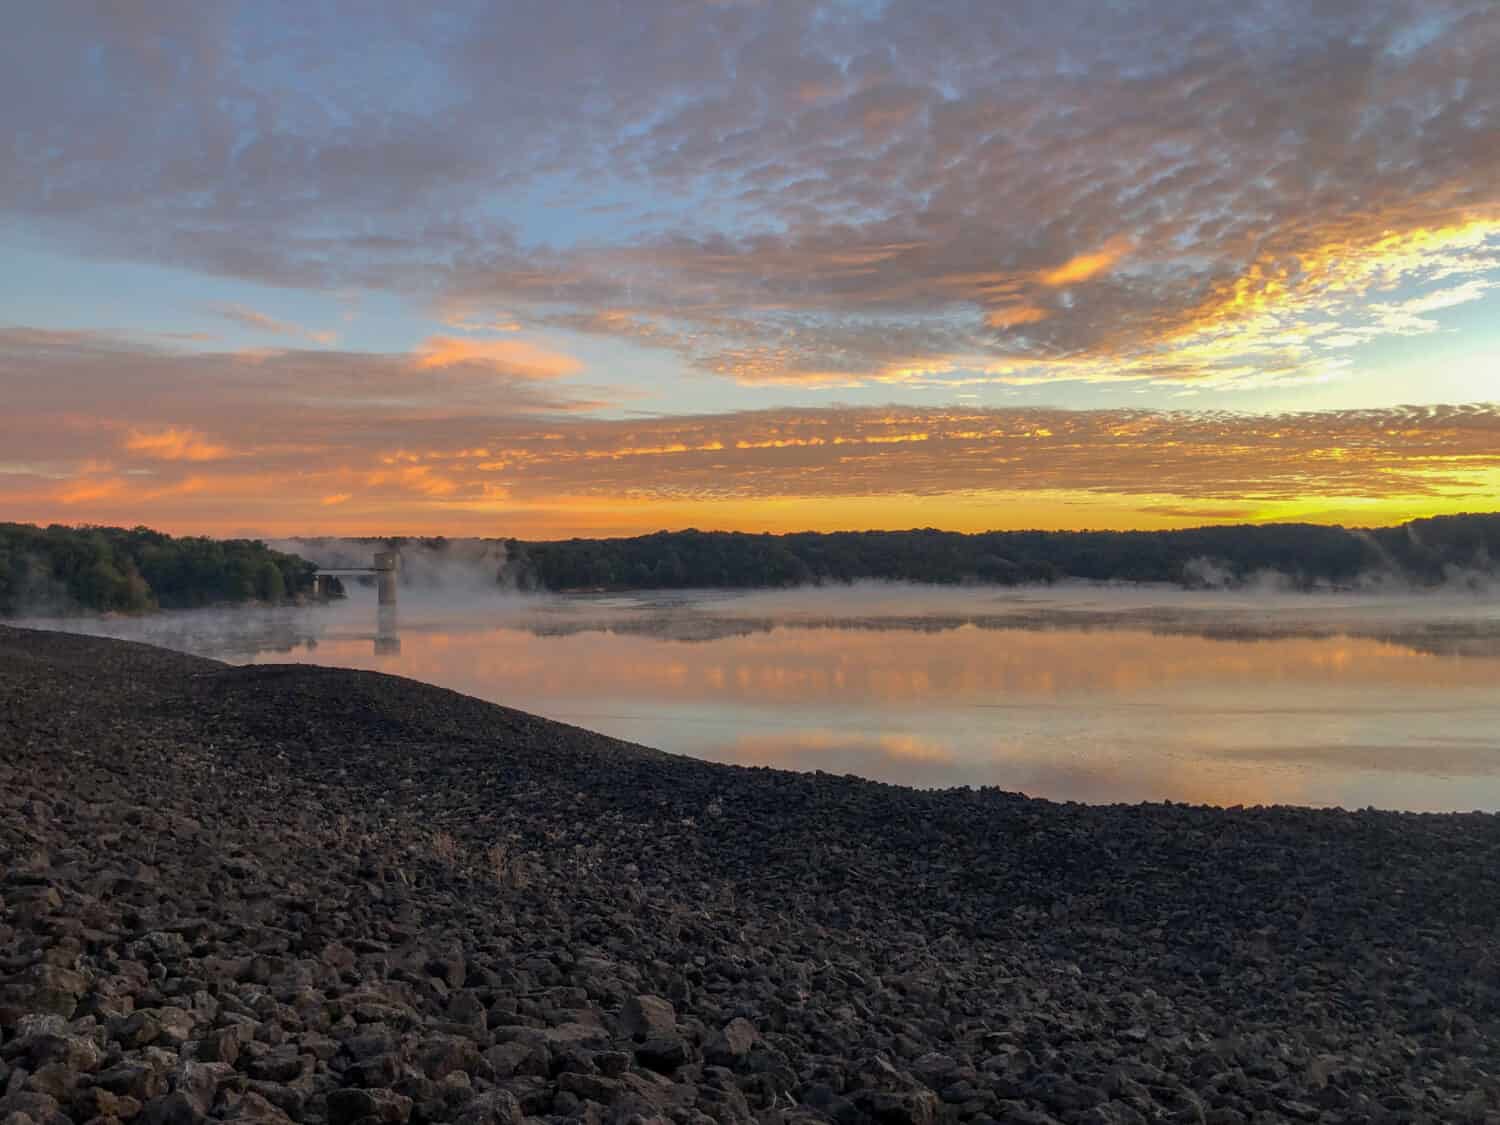 Beautiful sunrise at William Harsha Dam in Batavia, Ohio.